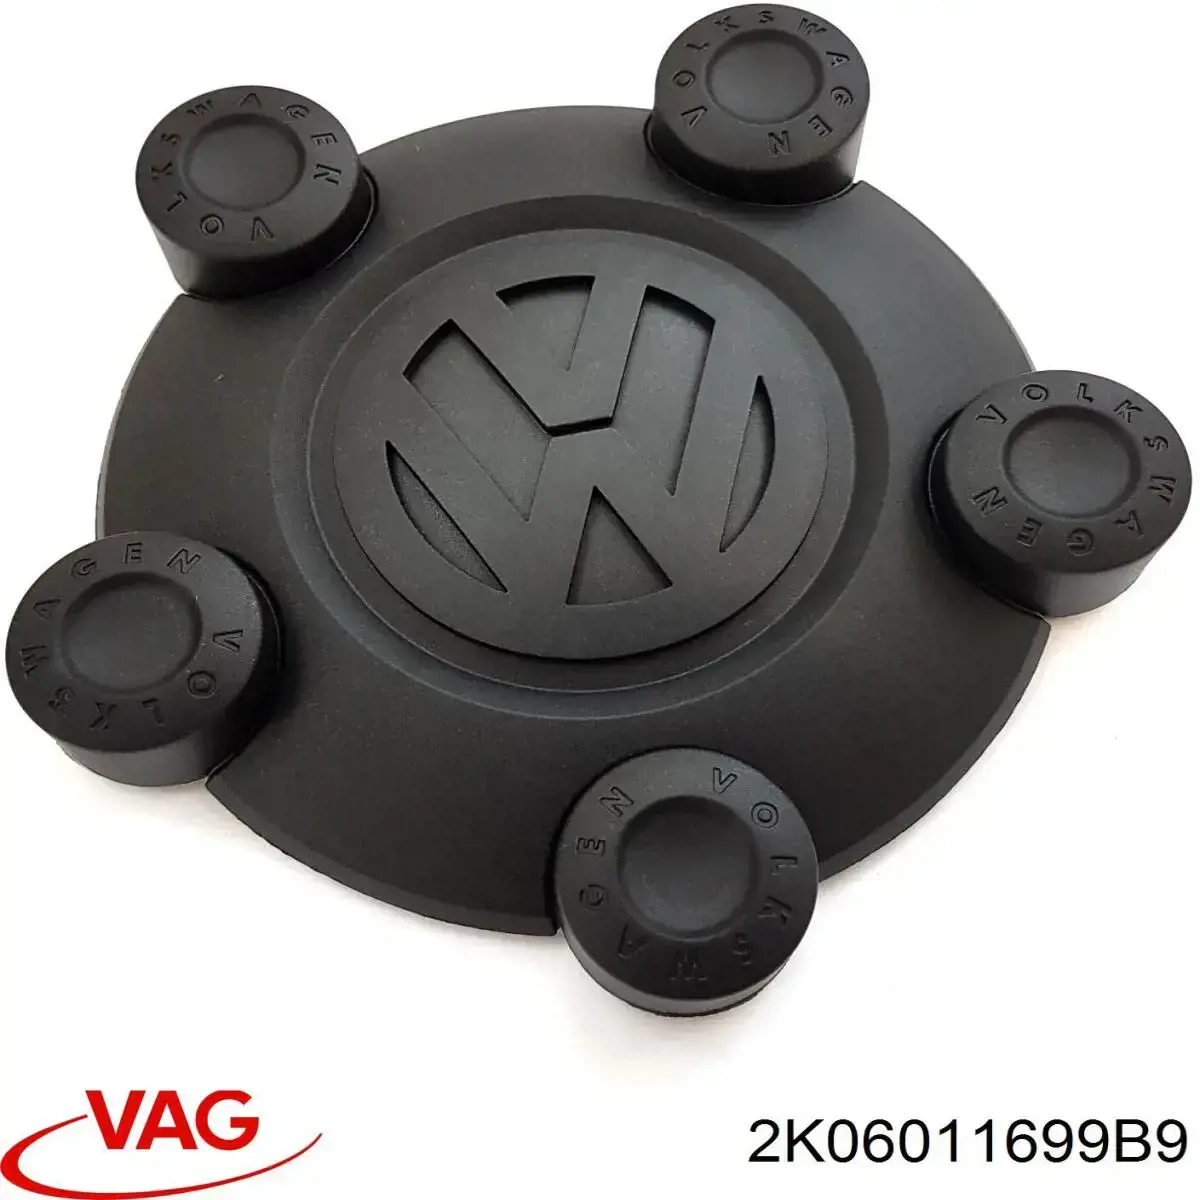 Coberta de disco de roda para Volkswagen Caddy (SAA)